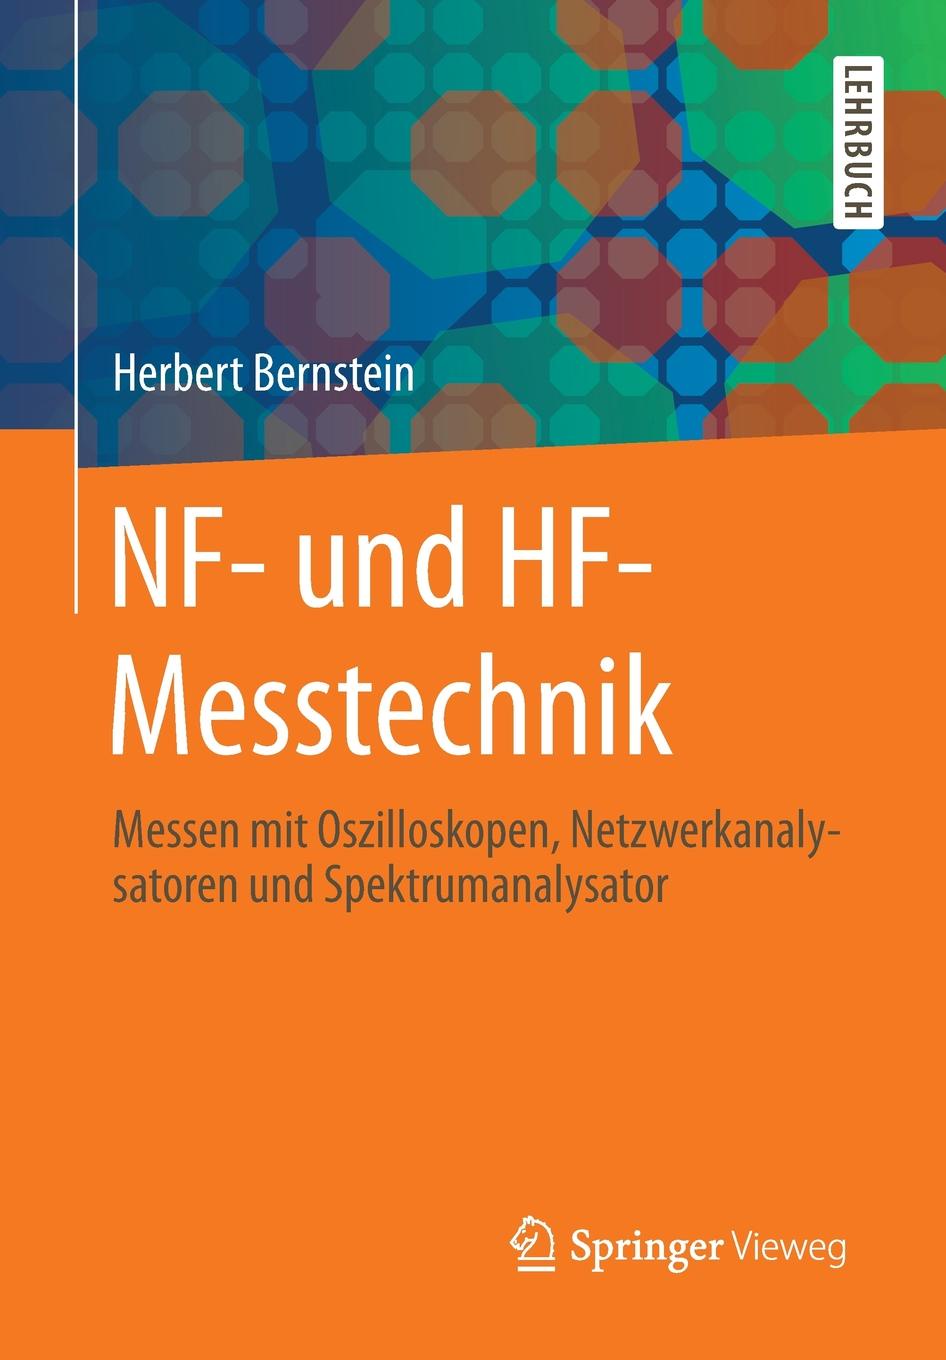 NF- und HF-Messtechnik. Messen mit Oszilloskopen, Netzwerkanalysatoren und Spektrumanalysator